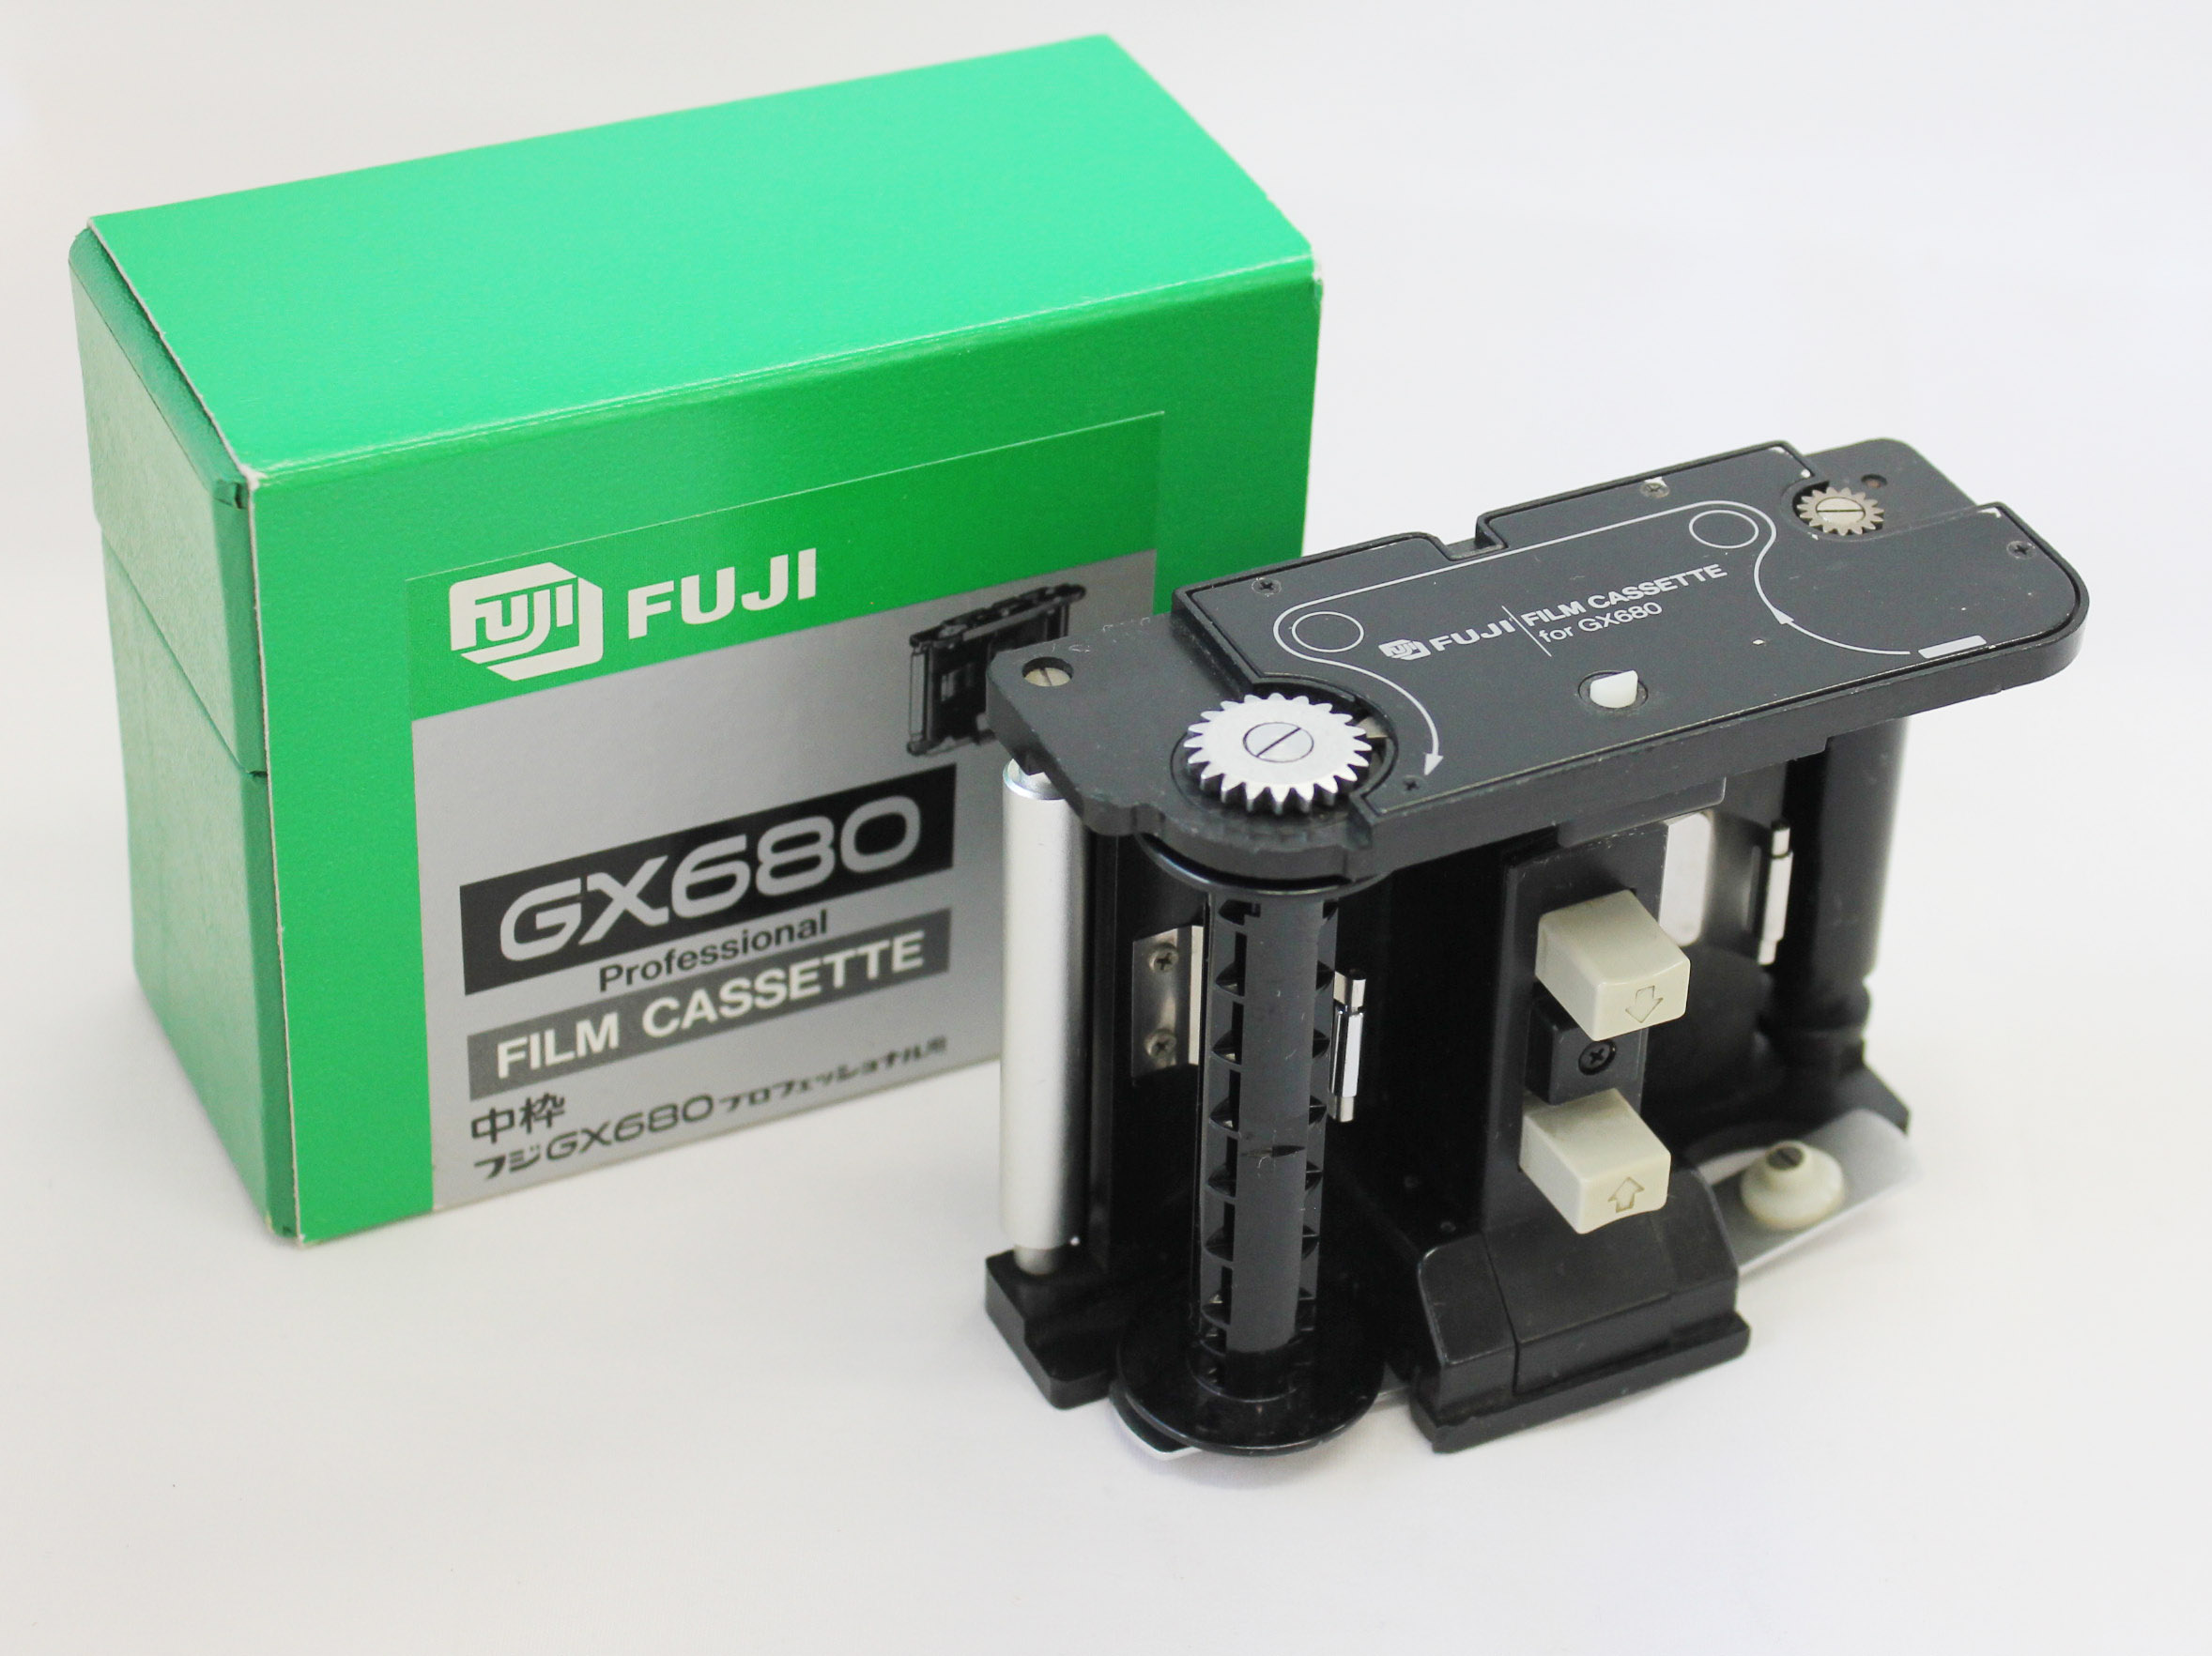 Japan Used Camera Shop | Fuji Fujifilm GX680 Professional Film Casette Insert in Box from Japan